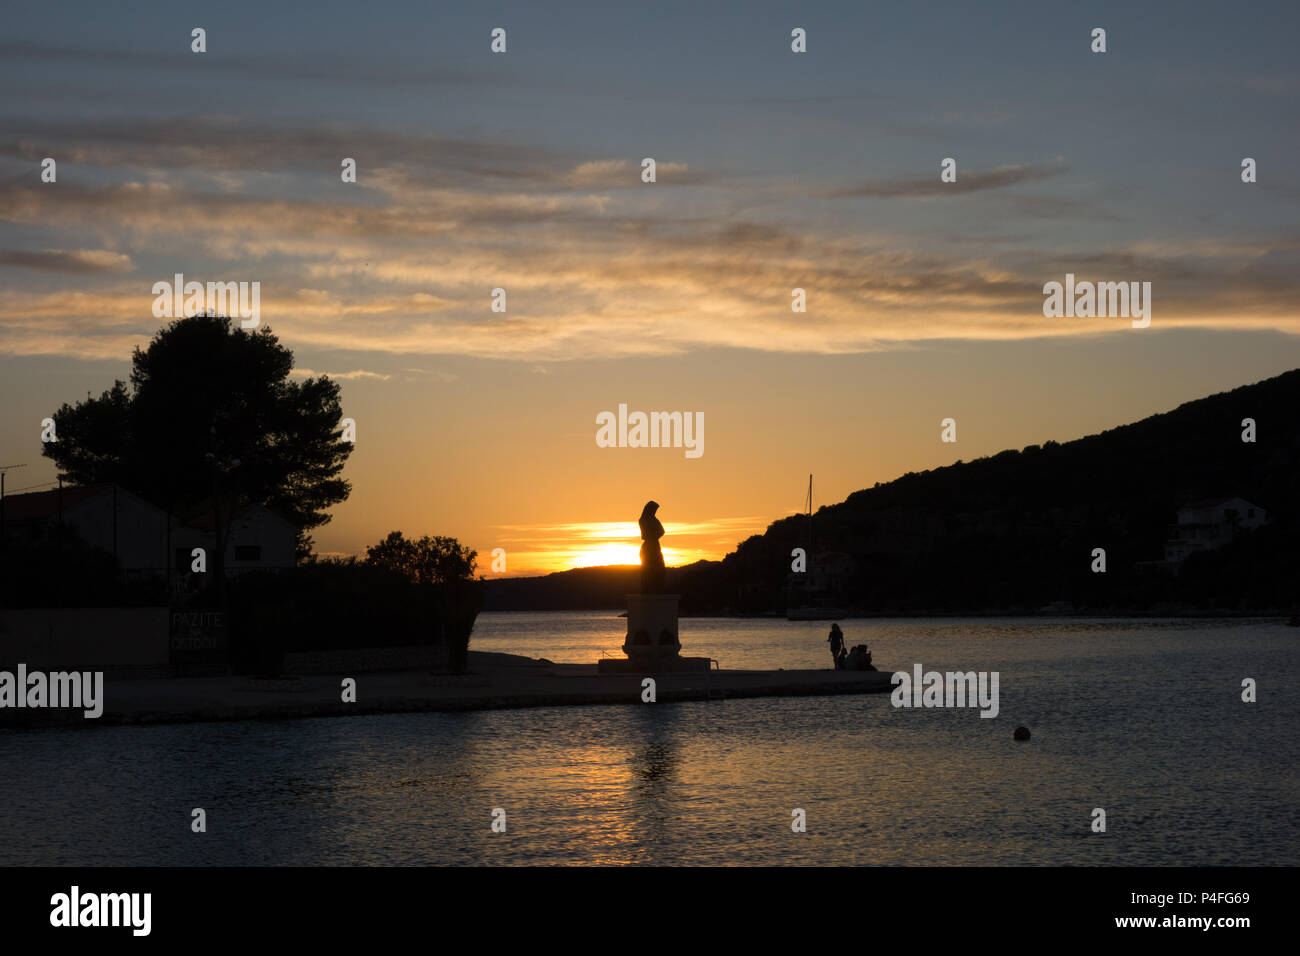 A statue on the island of Veliki Drvenik, Croatia, at sunset Stock Photo